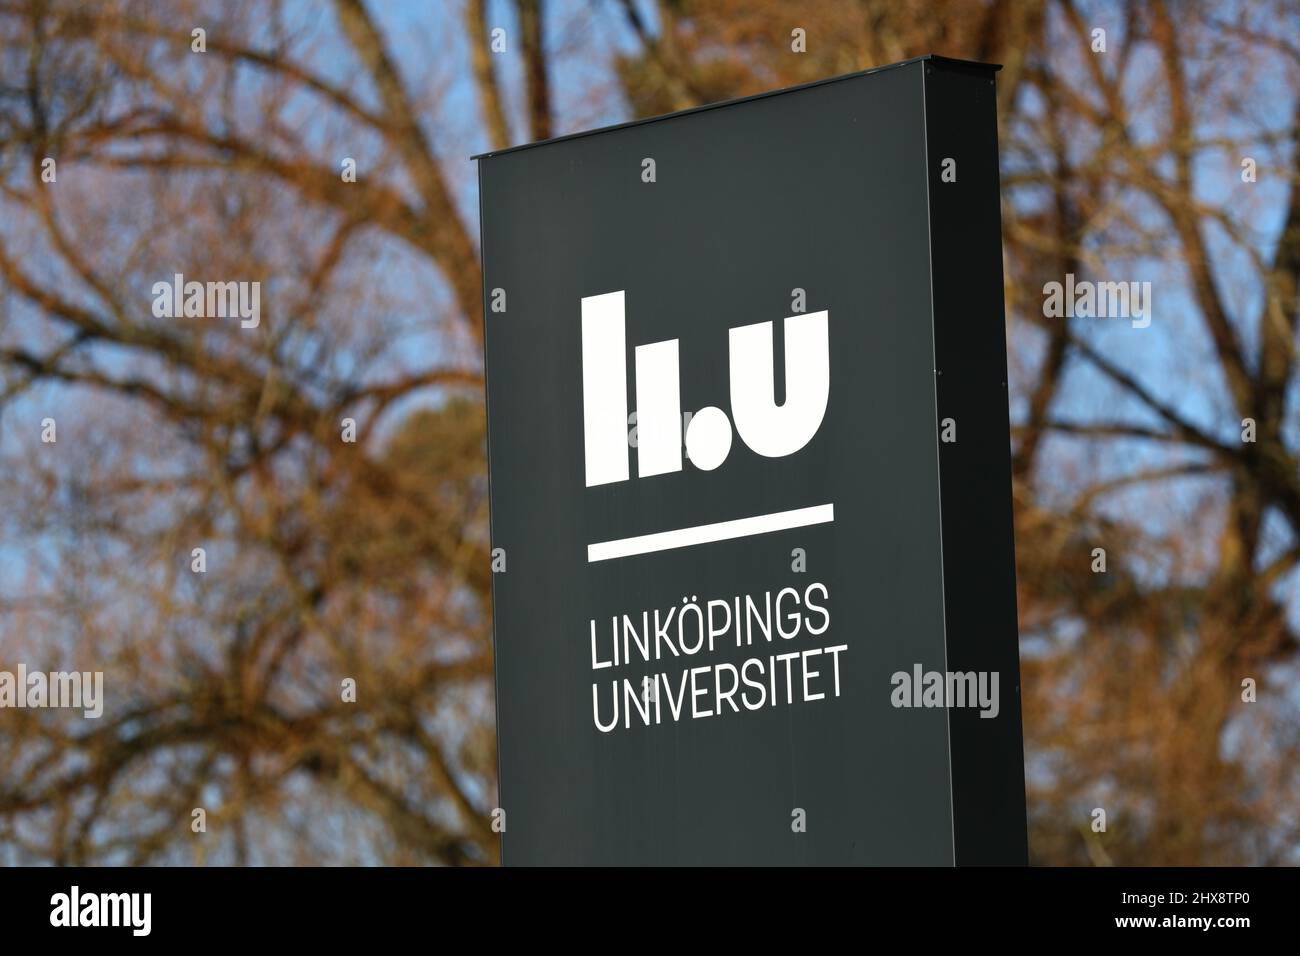 Linköping University in the city of Linköping, Sweden. Stock Photo